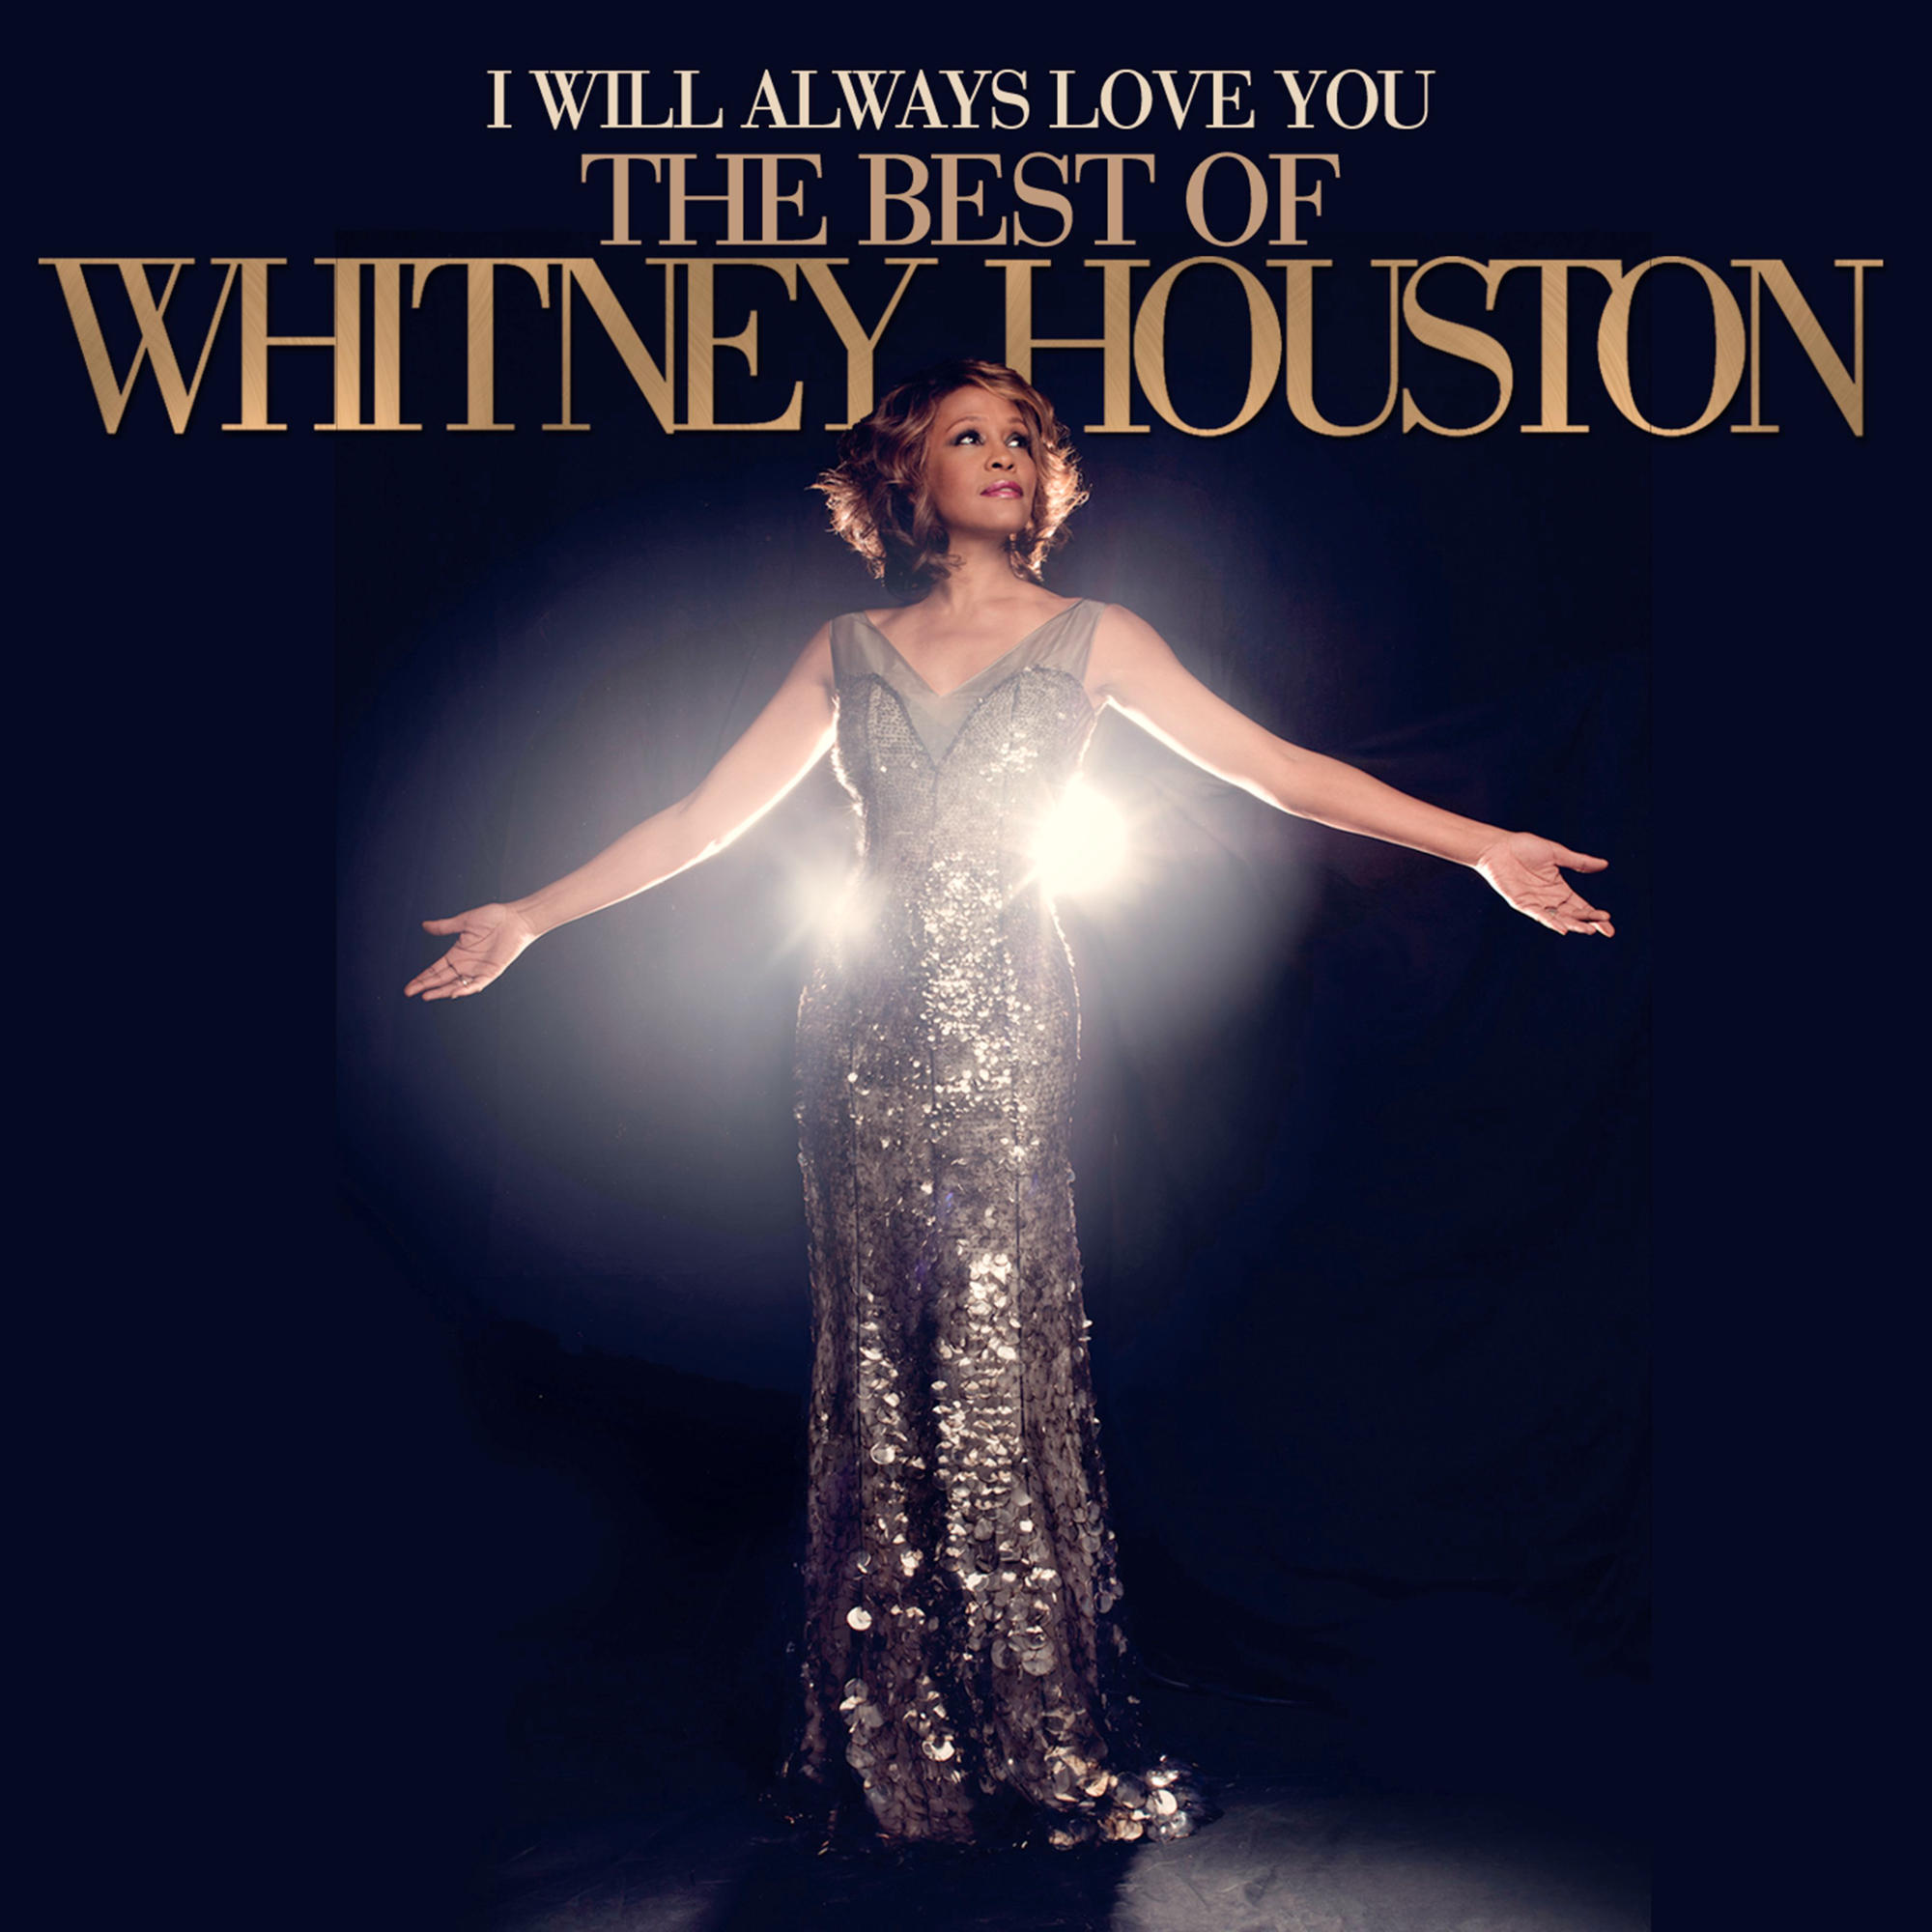 Whitney (CD) Will I Love Best Of - The Whitney - You: Houston Houston Always